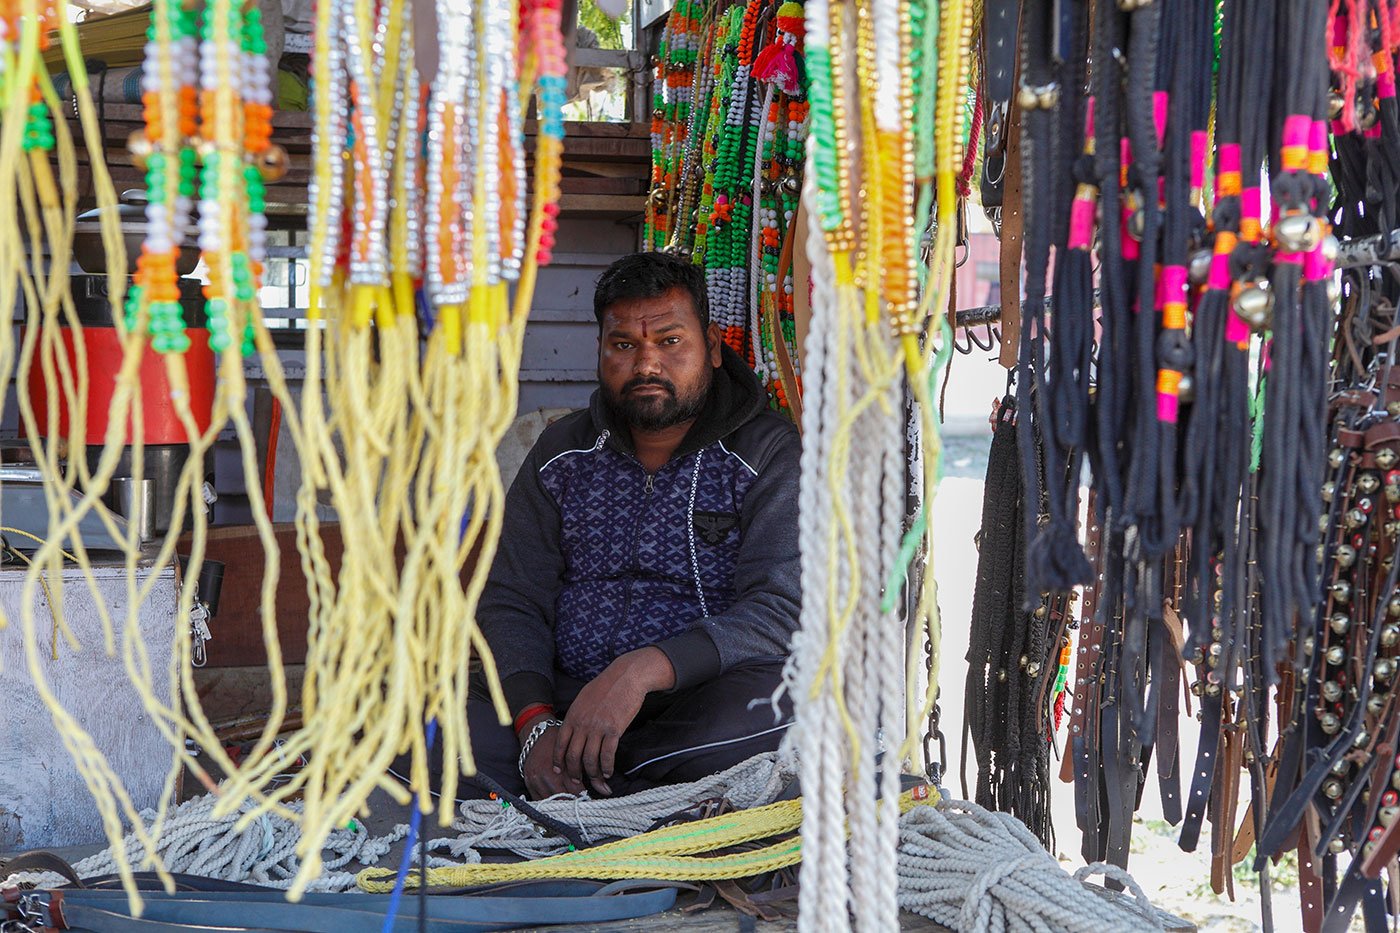 Man selling goat trinkets